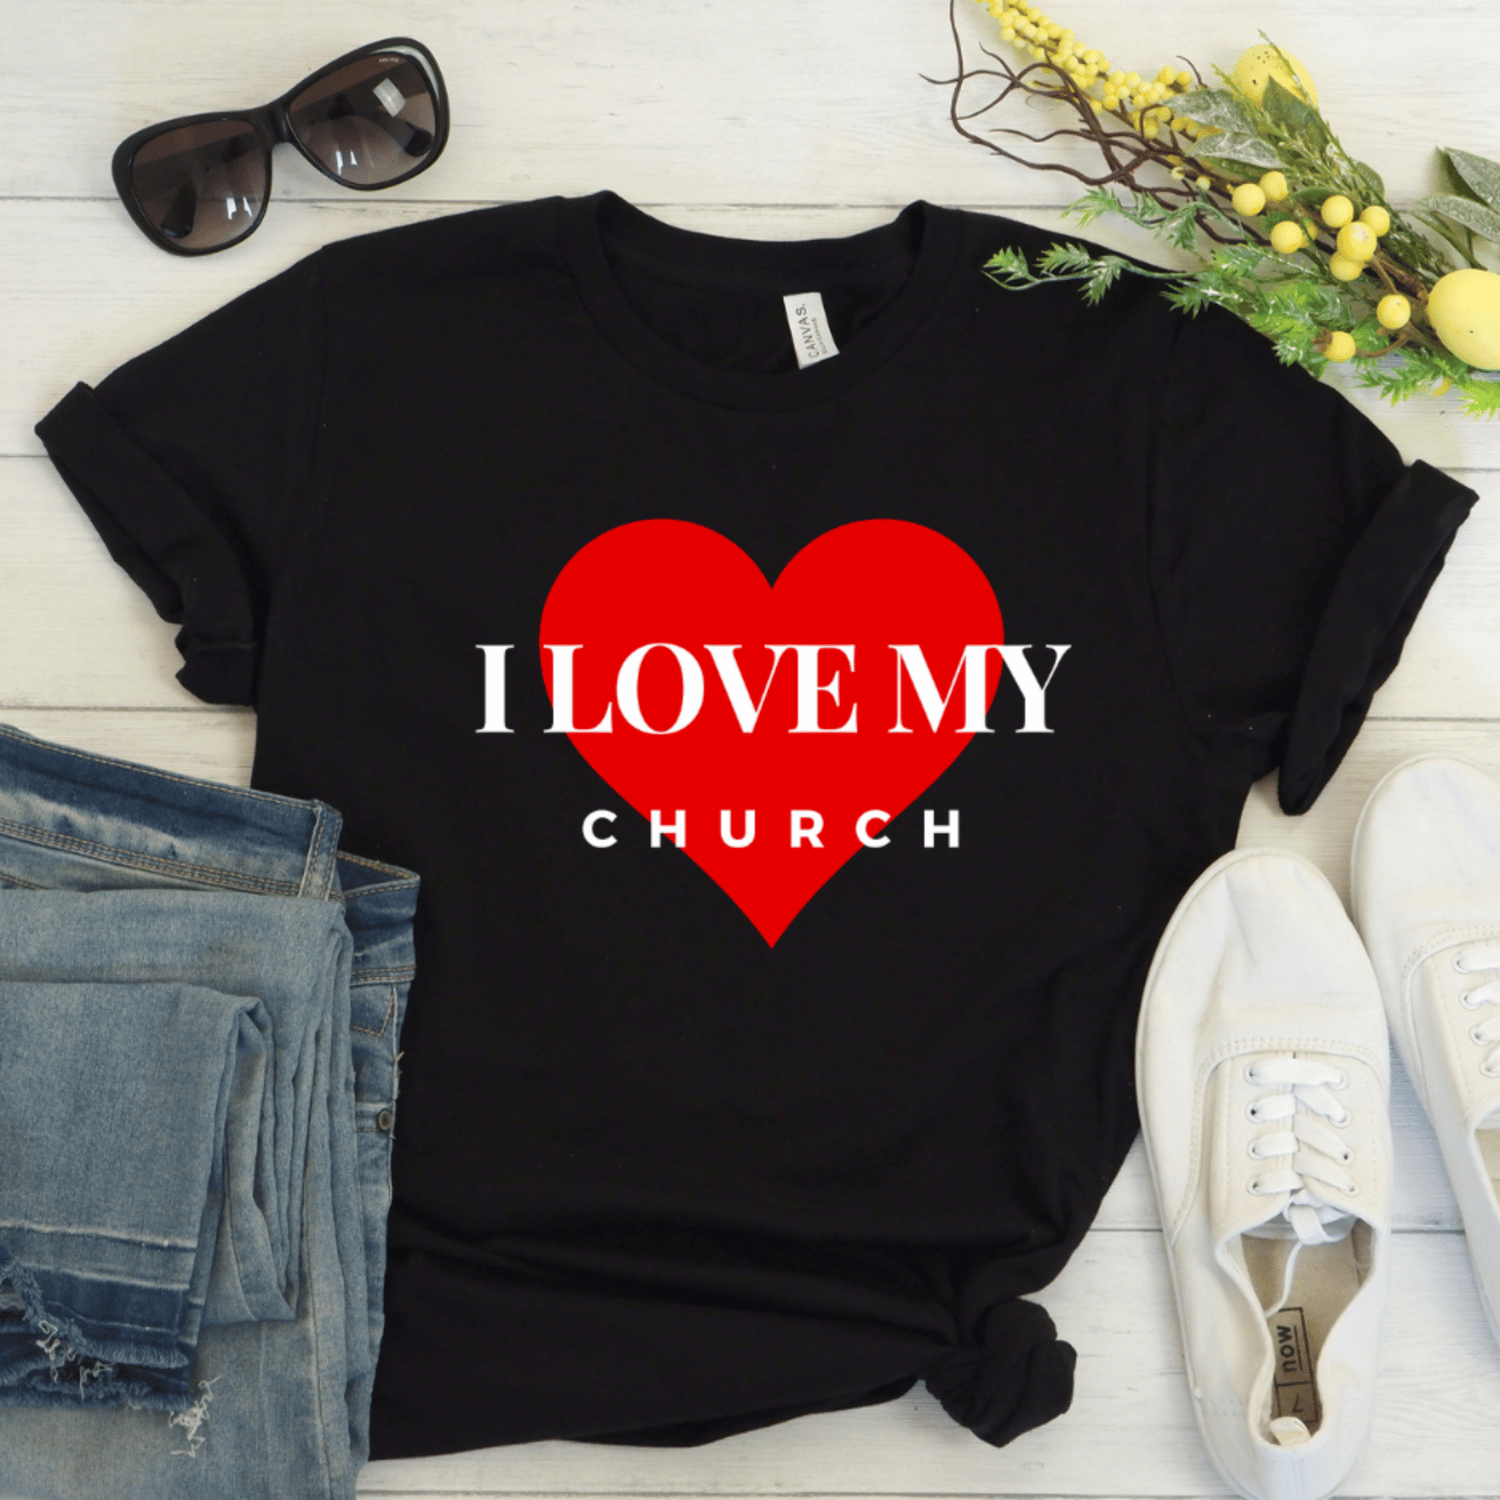 Image of "I LOVE MY CHURCH" Women's Faith-Based Black T-shirt